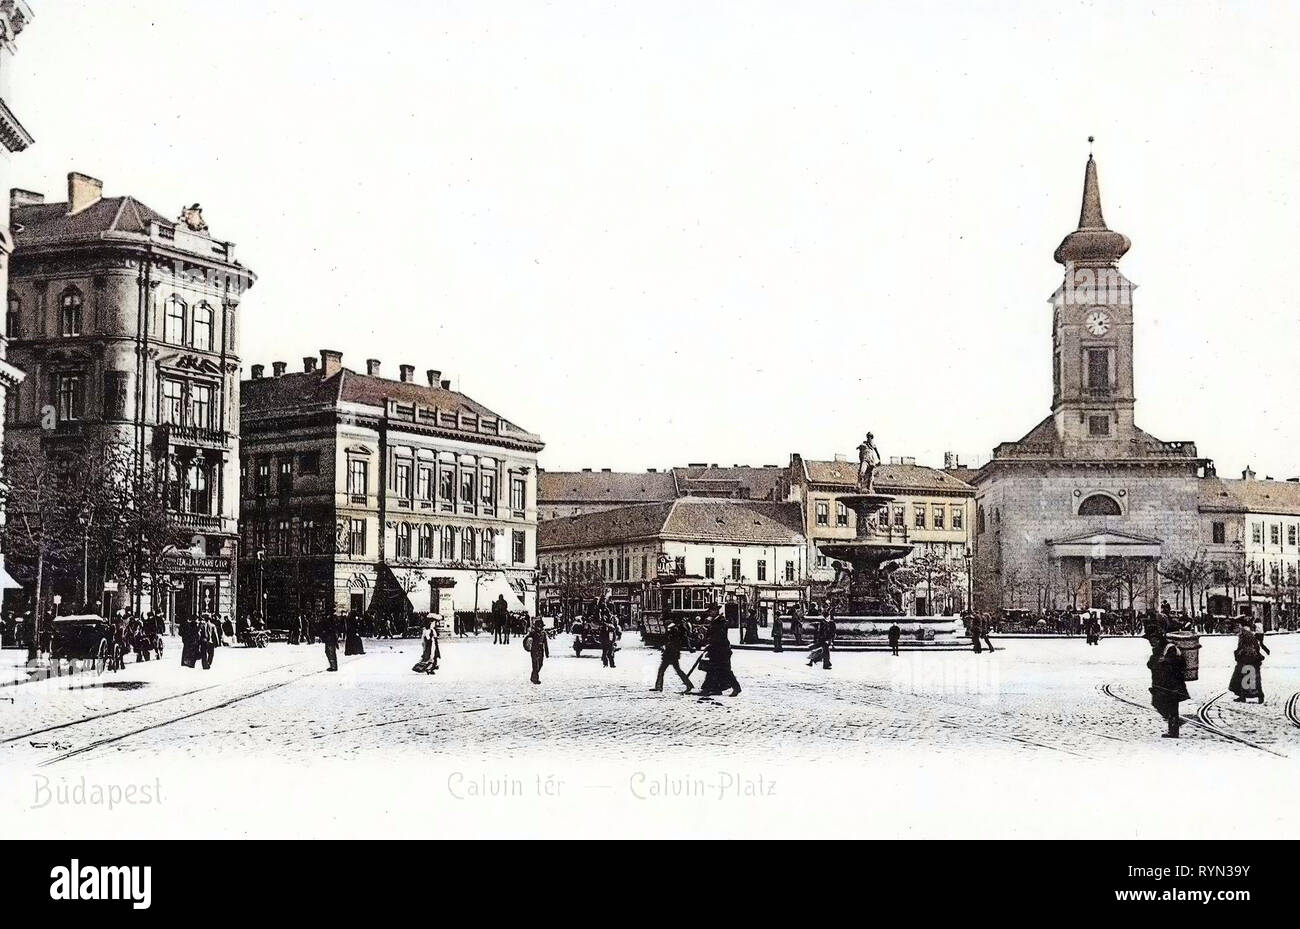 Kálvin Square Reformed Church, Budapest, Postcards of urban squares, 1904, Calvin, Platz mit Straßenbahn und Passanten, Hungary Stock Photo